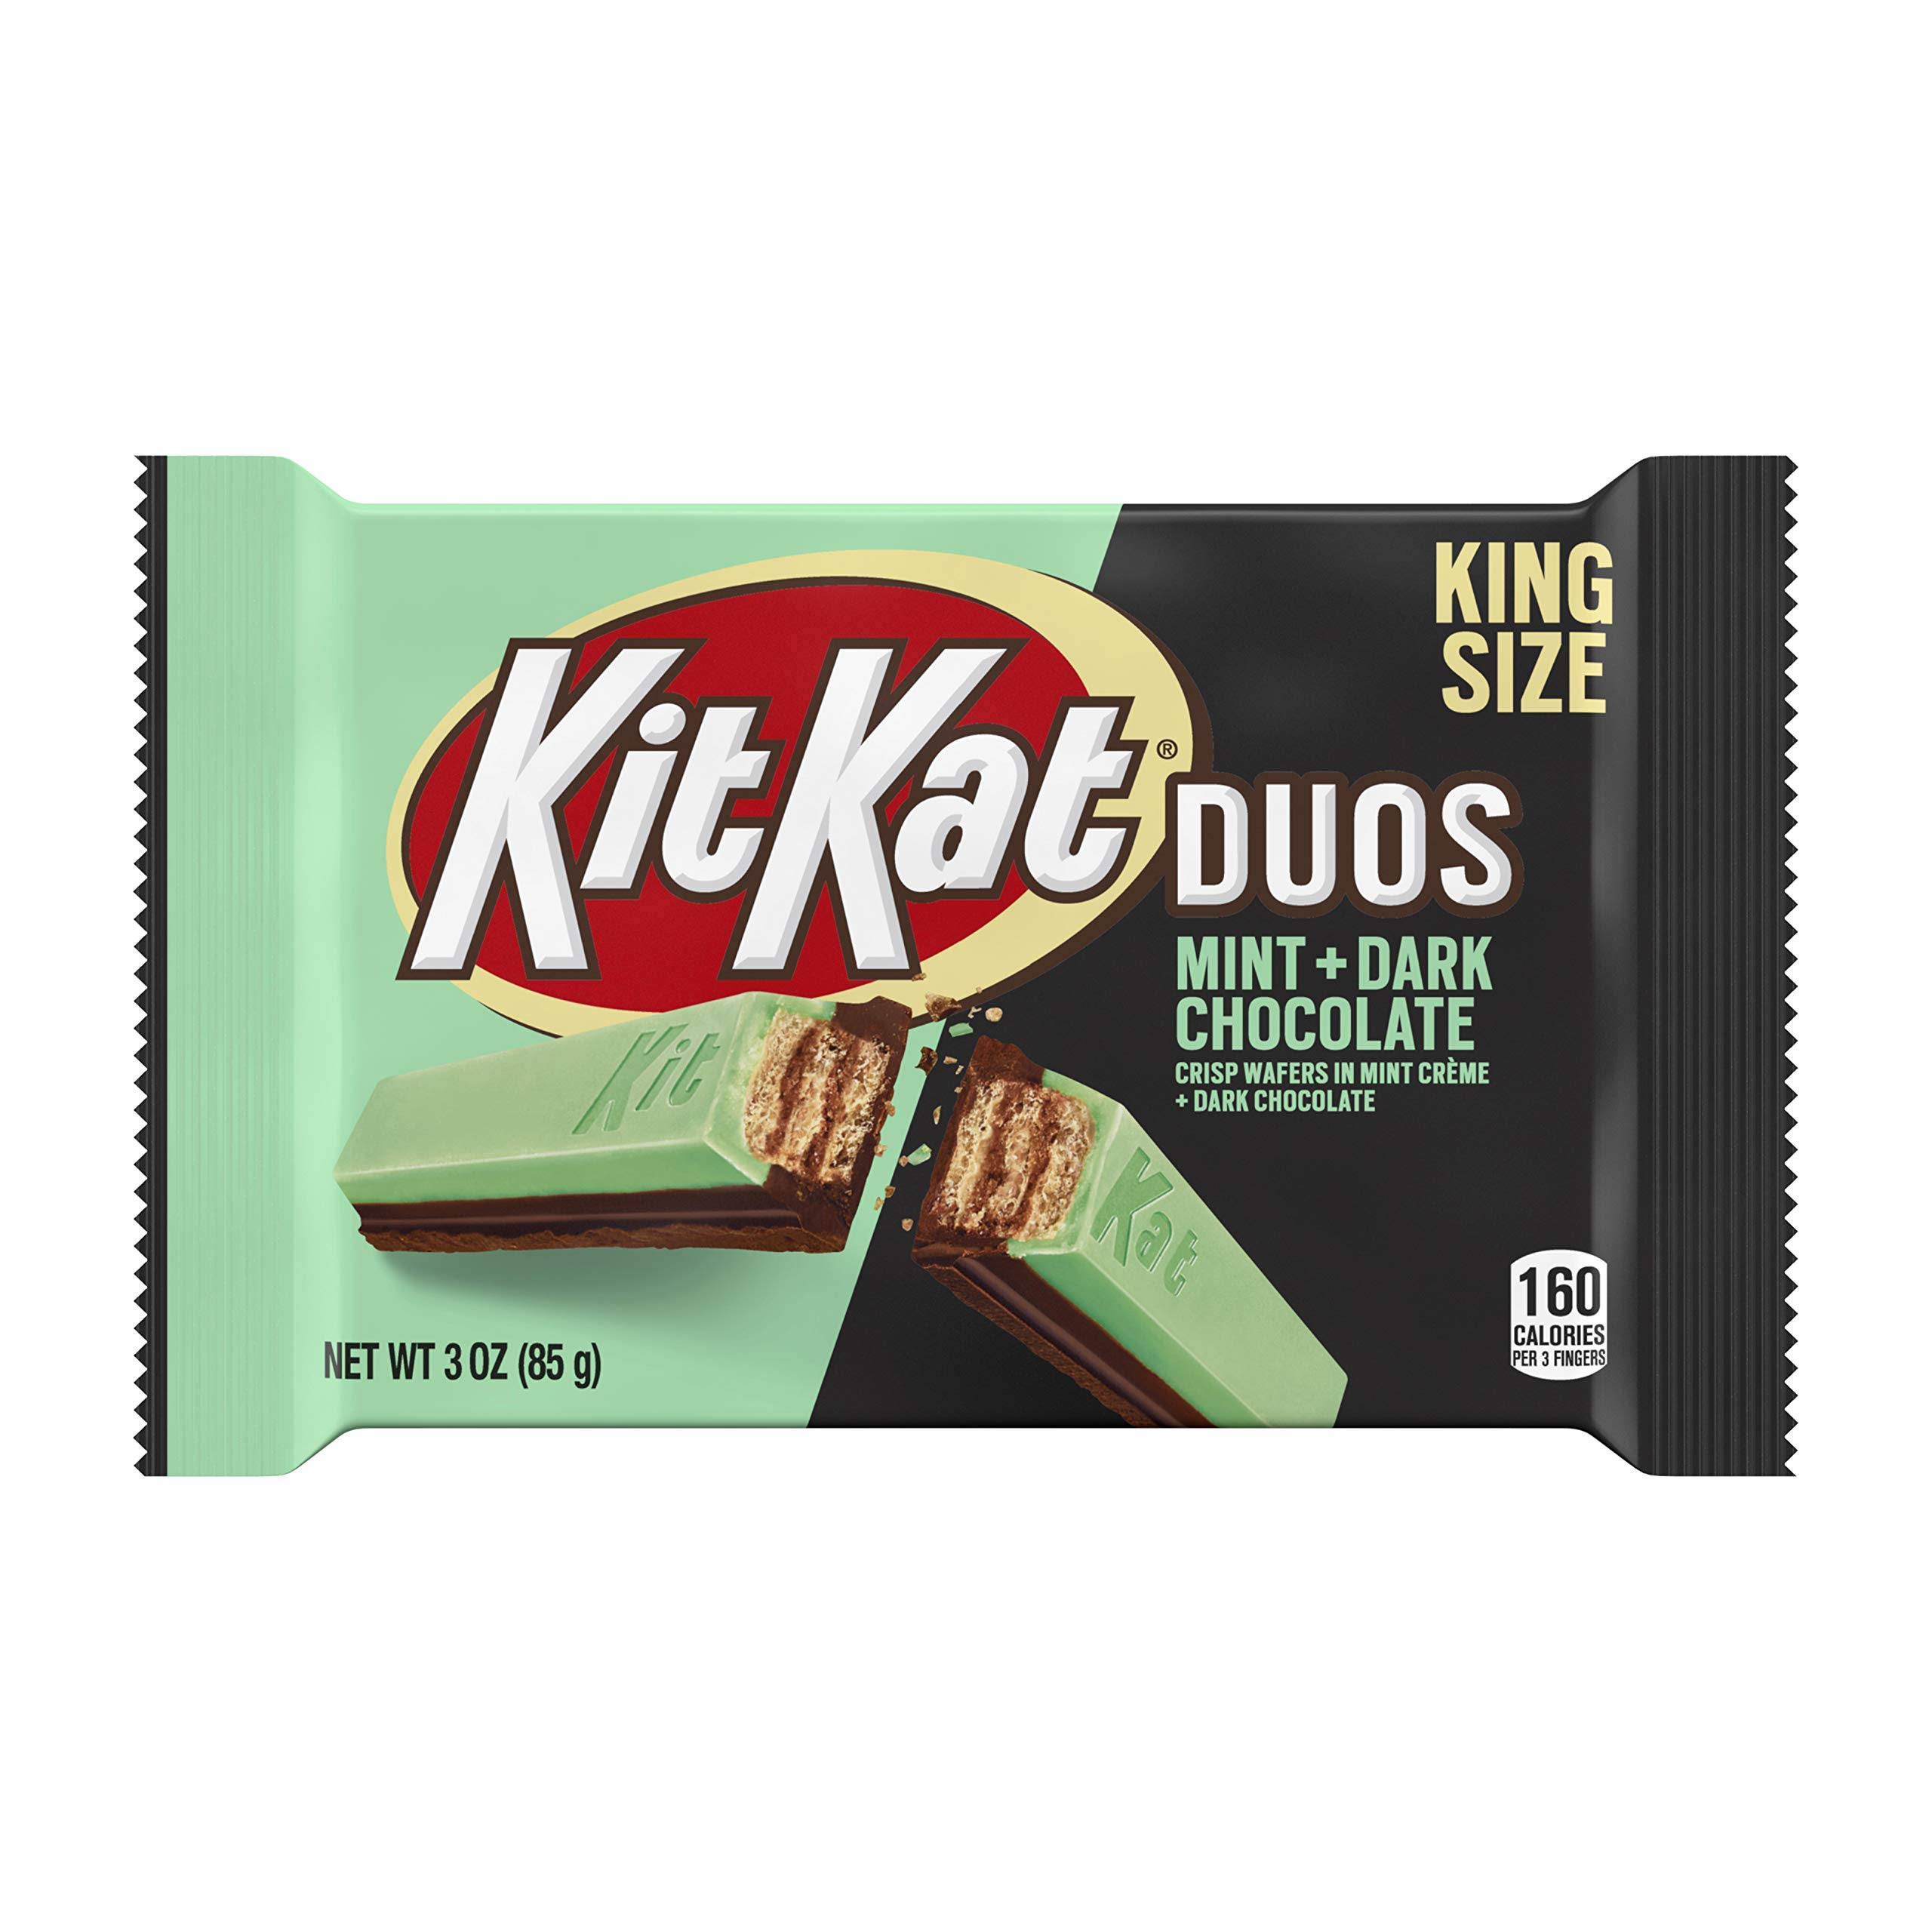 Kit Kat Duos Mint & Dark Chocolate King Size